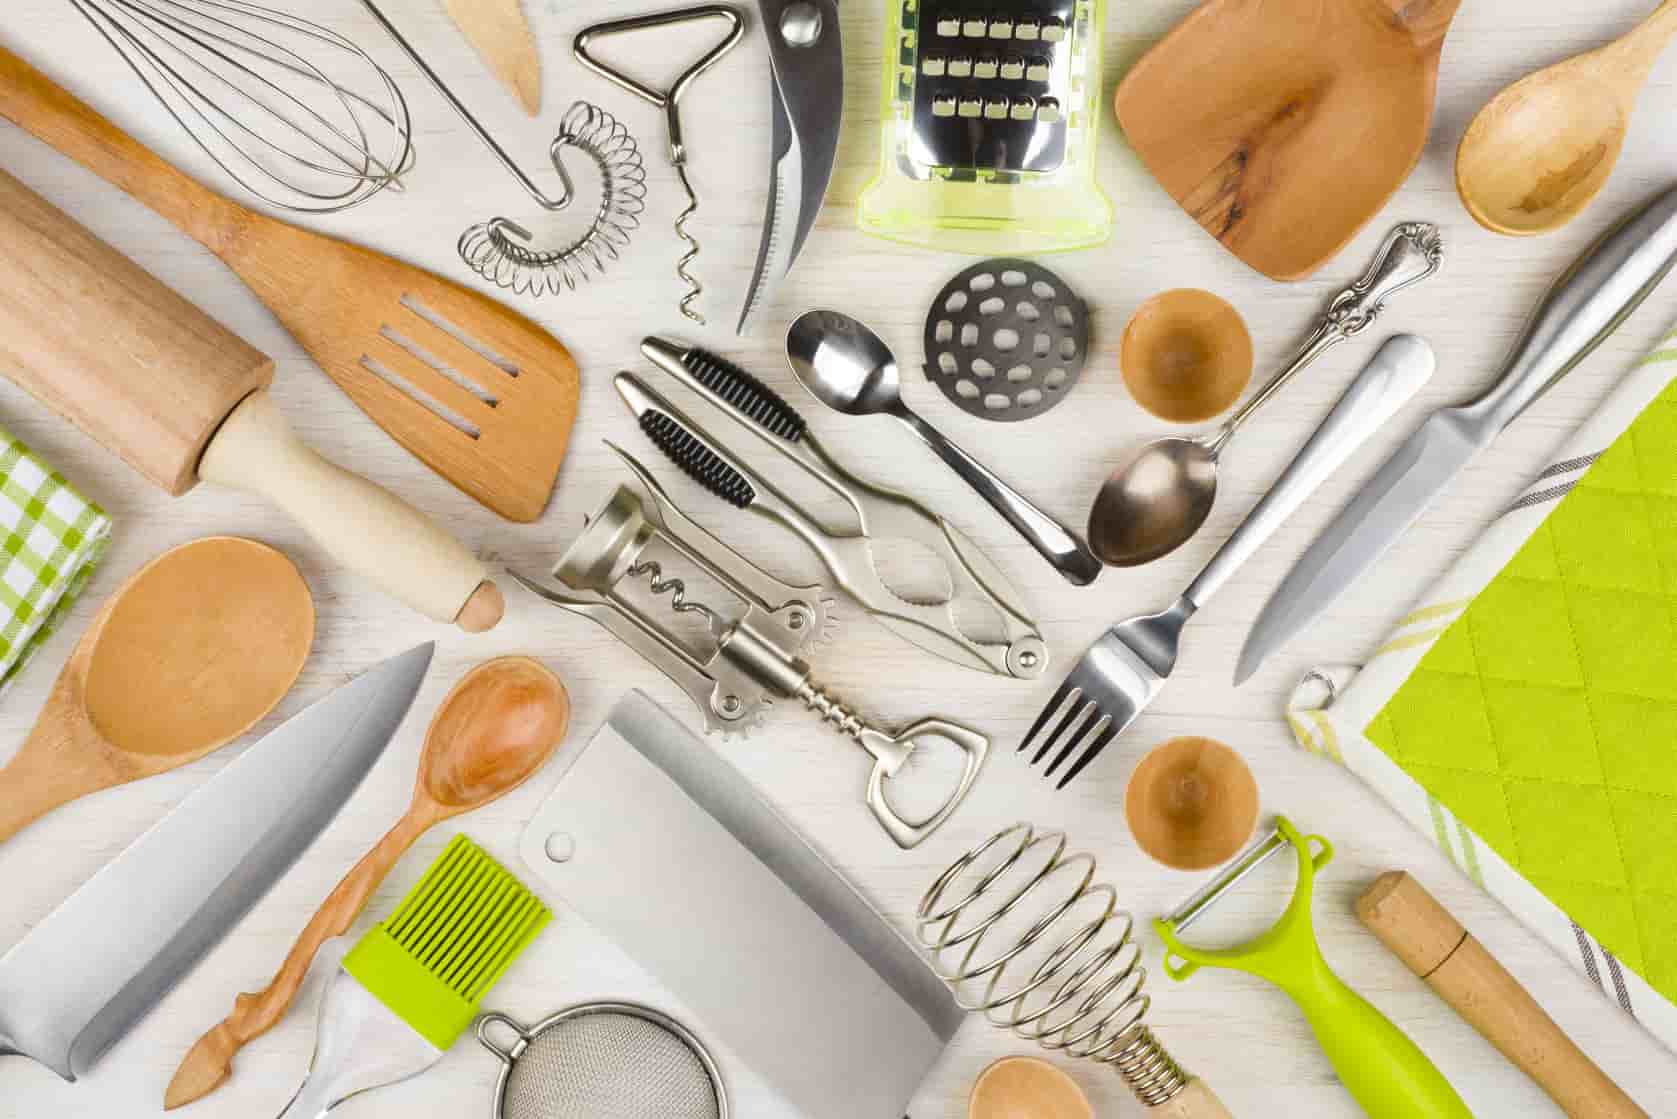 Plastic kitchenware items